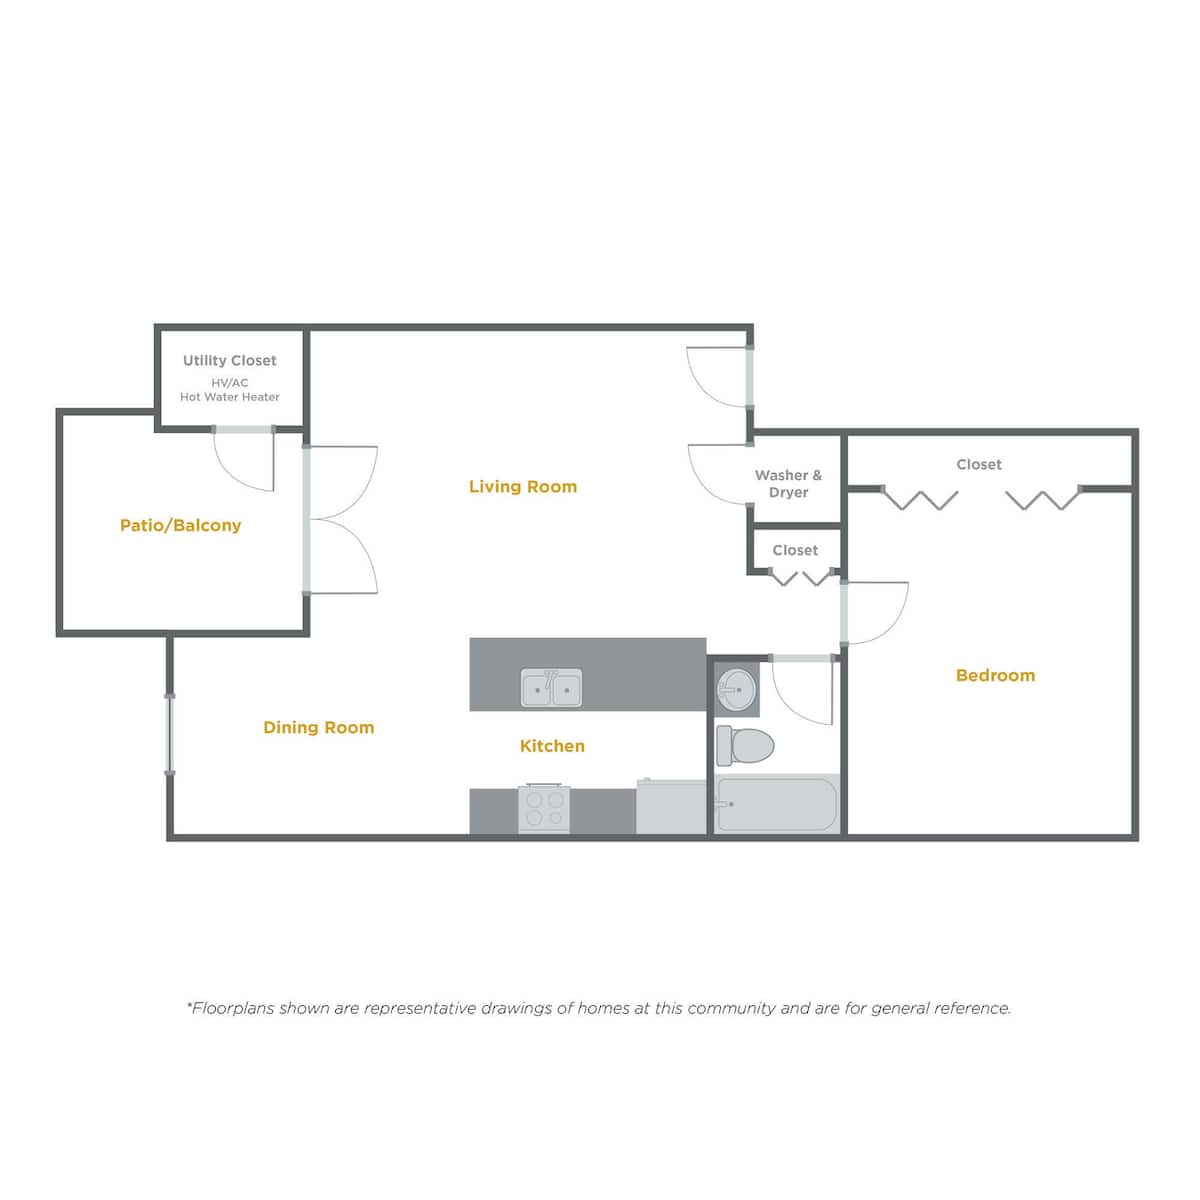 Floorplan diagram for a3_p, showing 1 bedroom